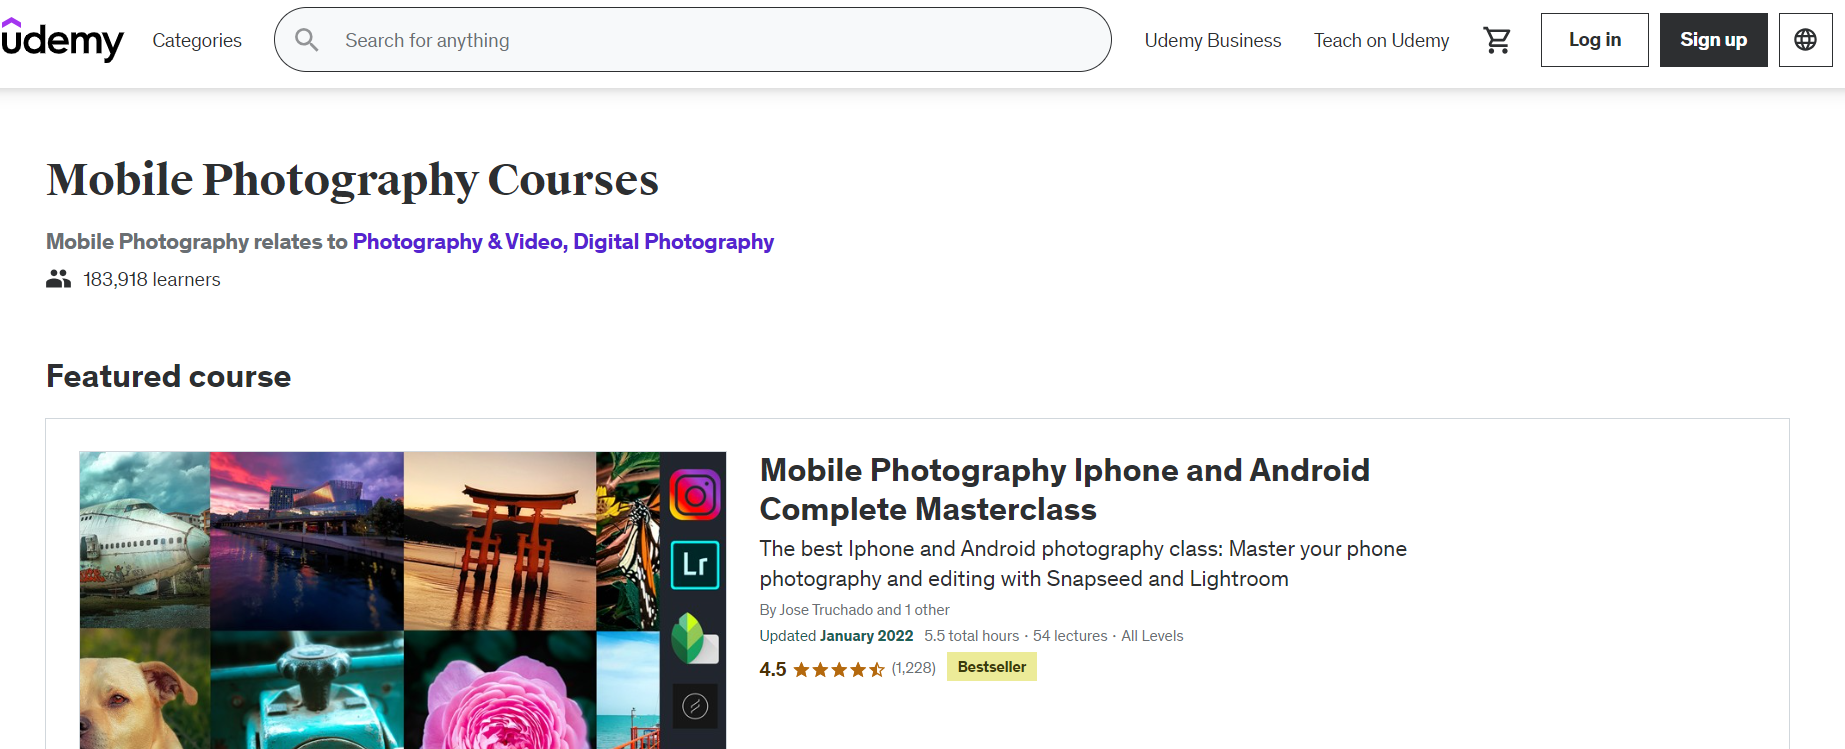 Best Phone & DSLR Photography Course